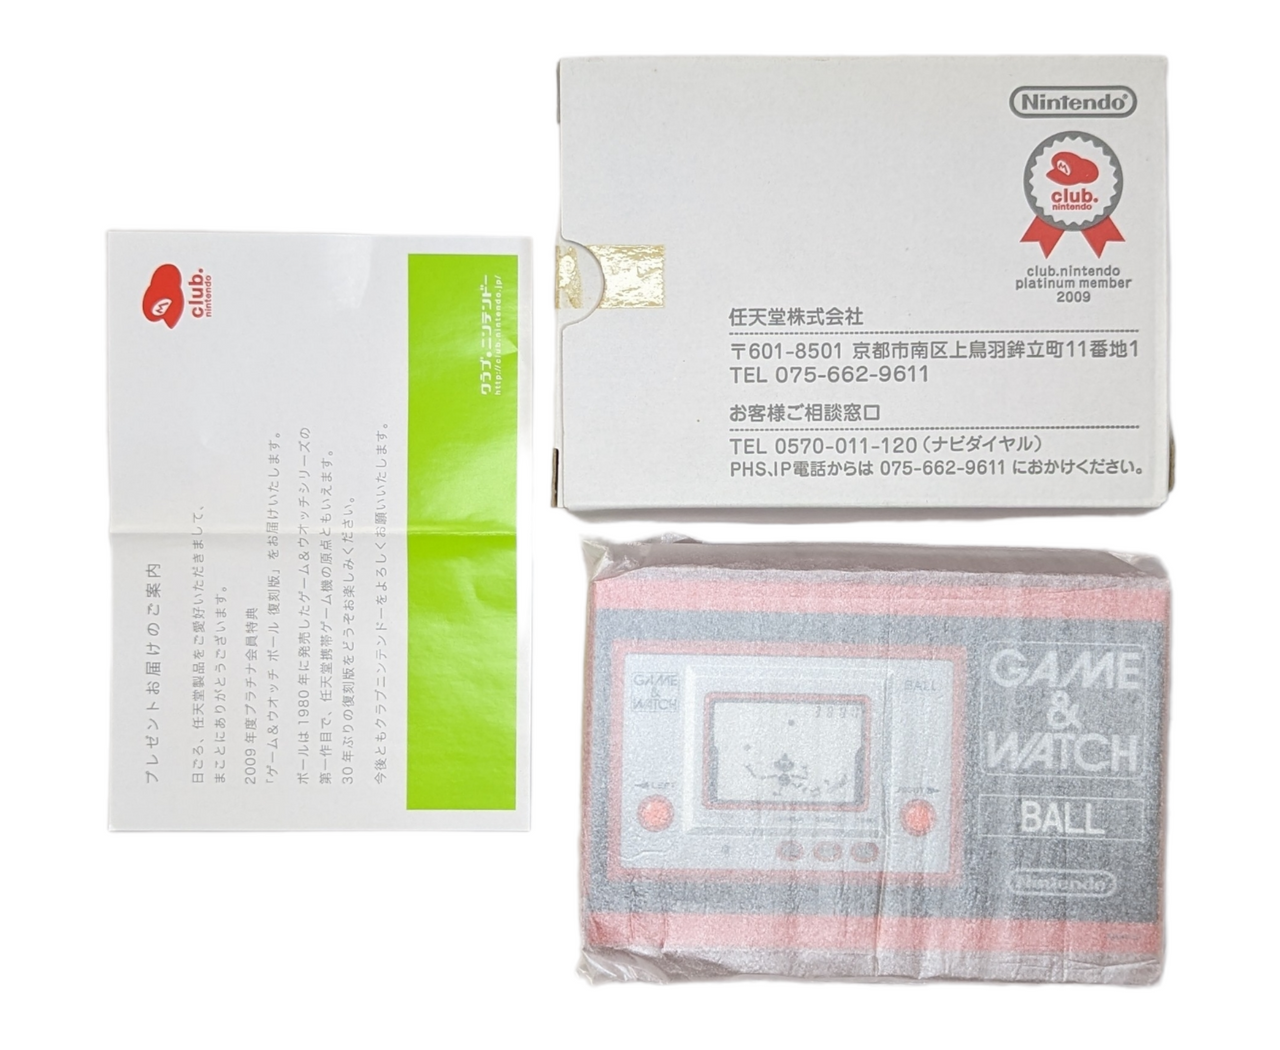 Pokémon Black and White Super Mario 64 DS Club Nintendo Flyer AD Point Card